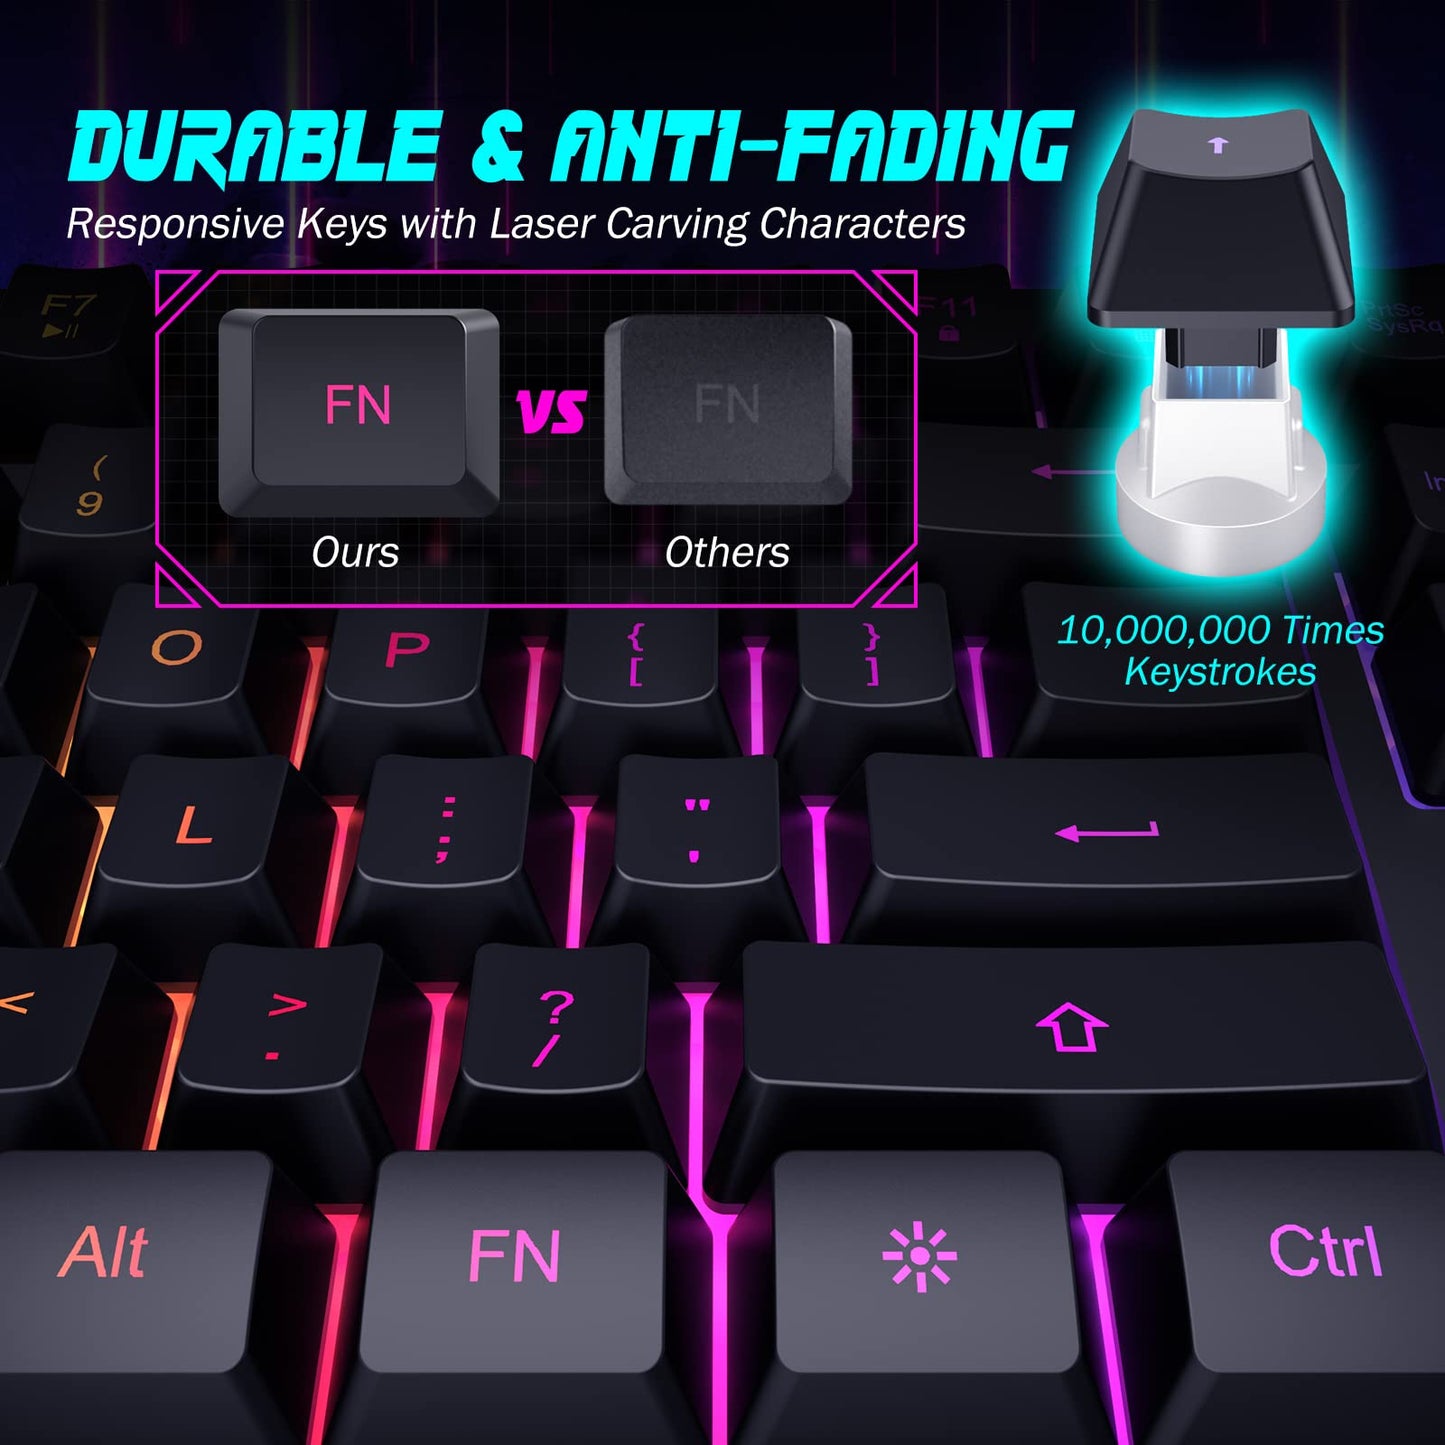 yesbeaut Gaming Keyboard, 7-Color Rainbow LED Backlit, 104 Keys Quiet Light Up Keyboard, Wrist Rest, Whisper Silent, Anti-ghosting Multimedia Keys, Waterproof USB Wired Keyboard for PC Mac Xbox - amzGamess